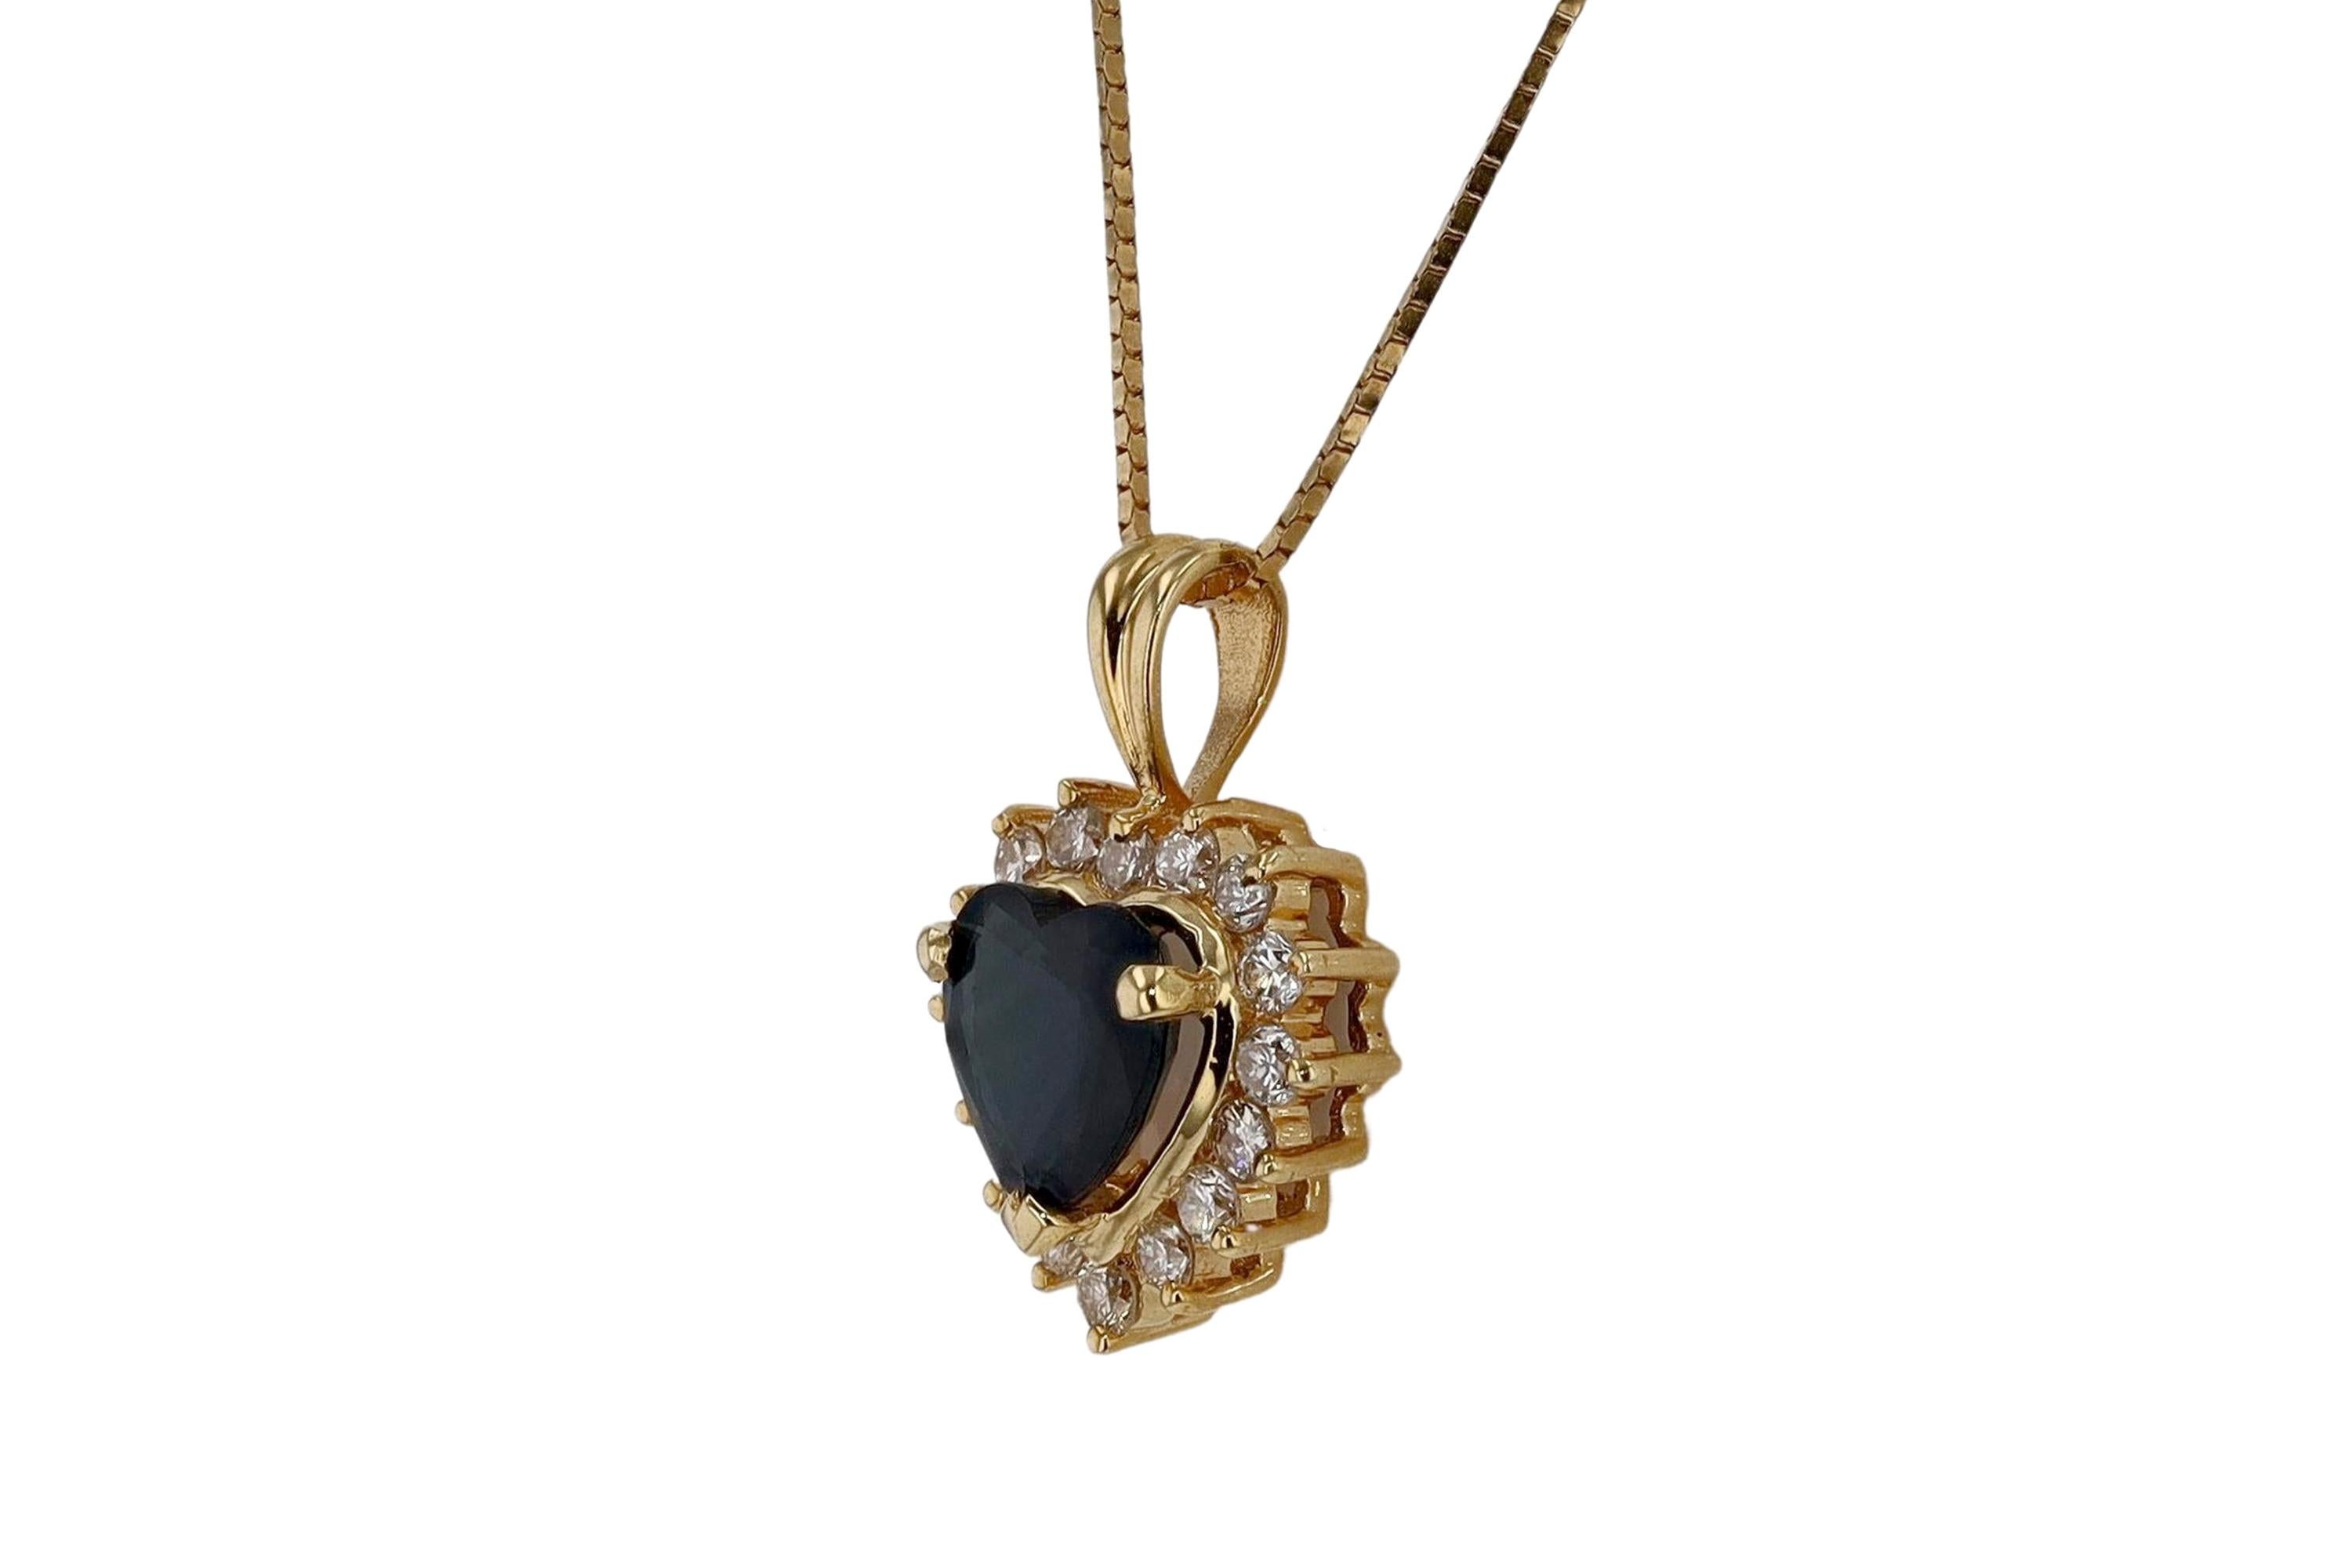 2 carat heart shaped diamond necklace